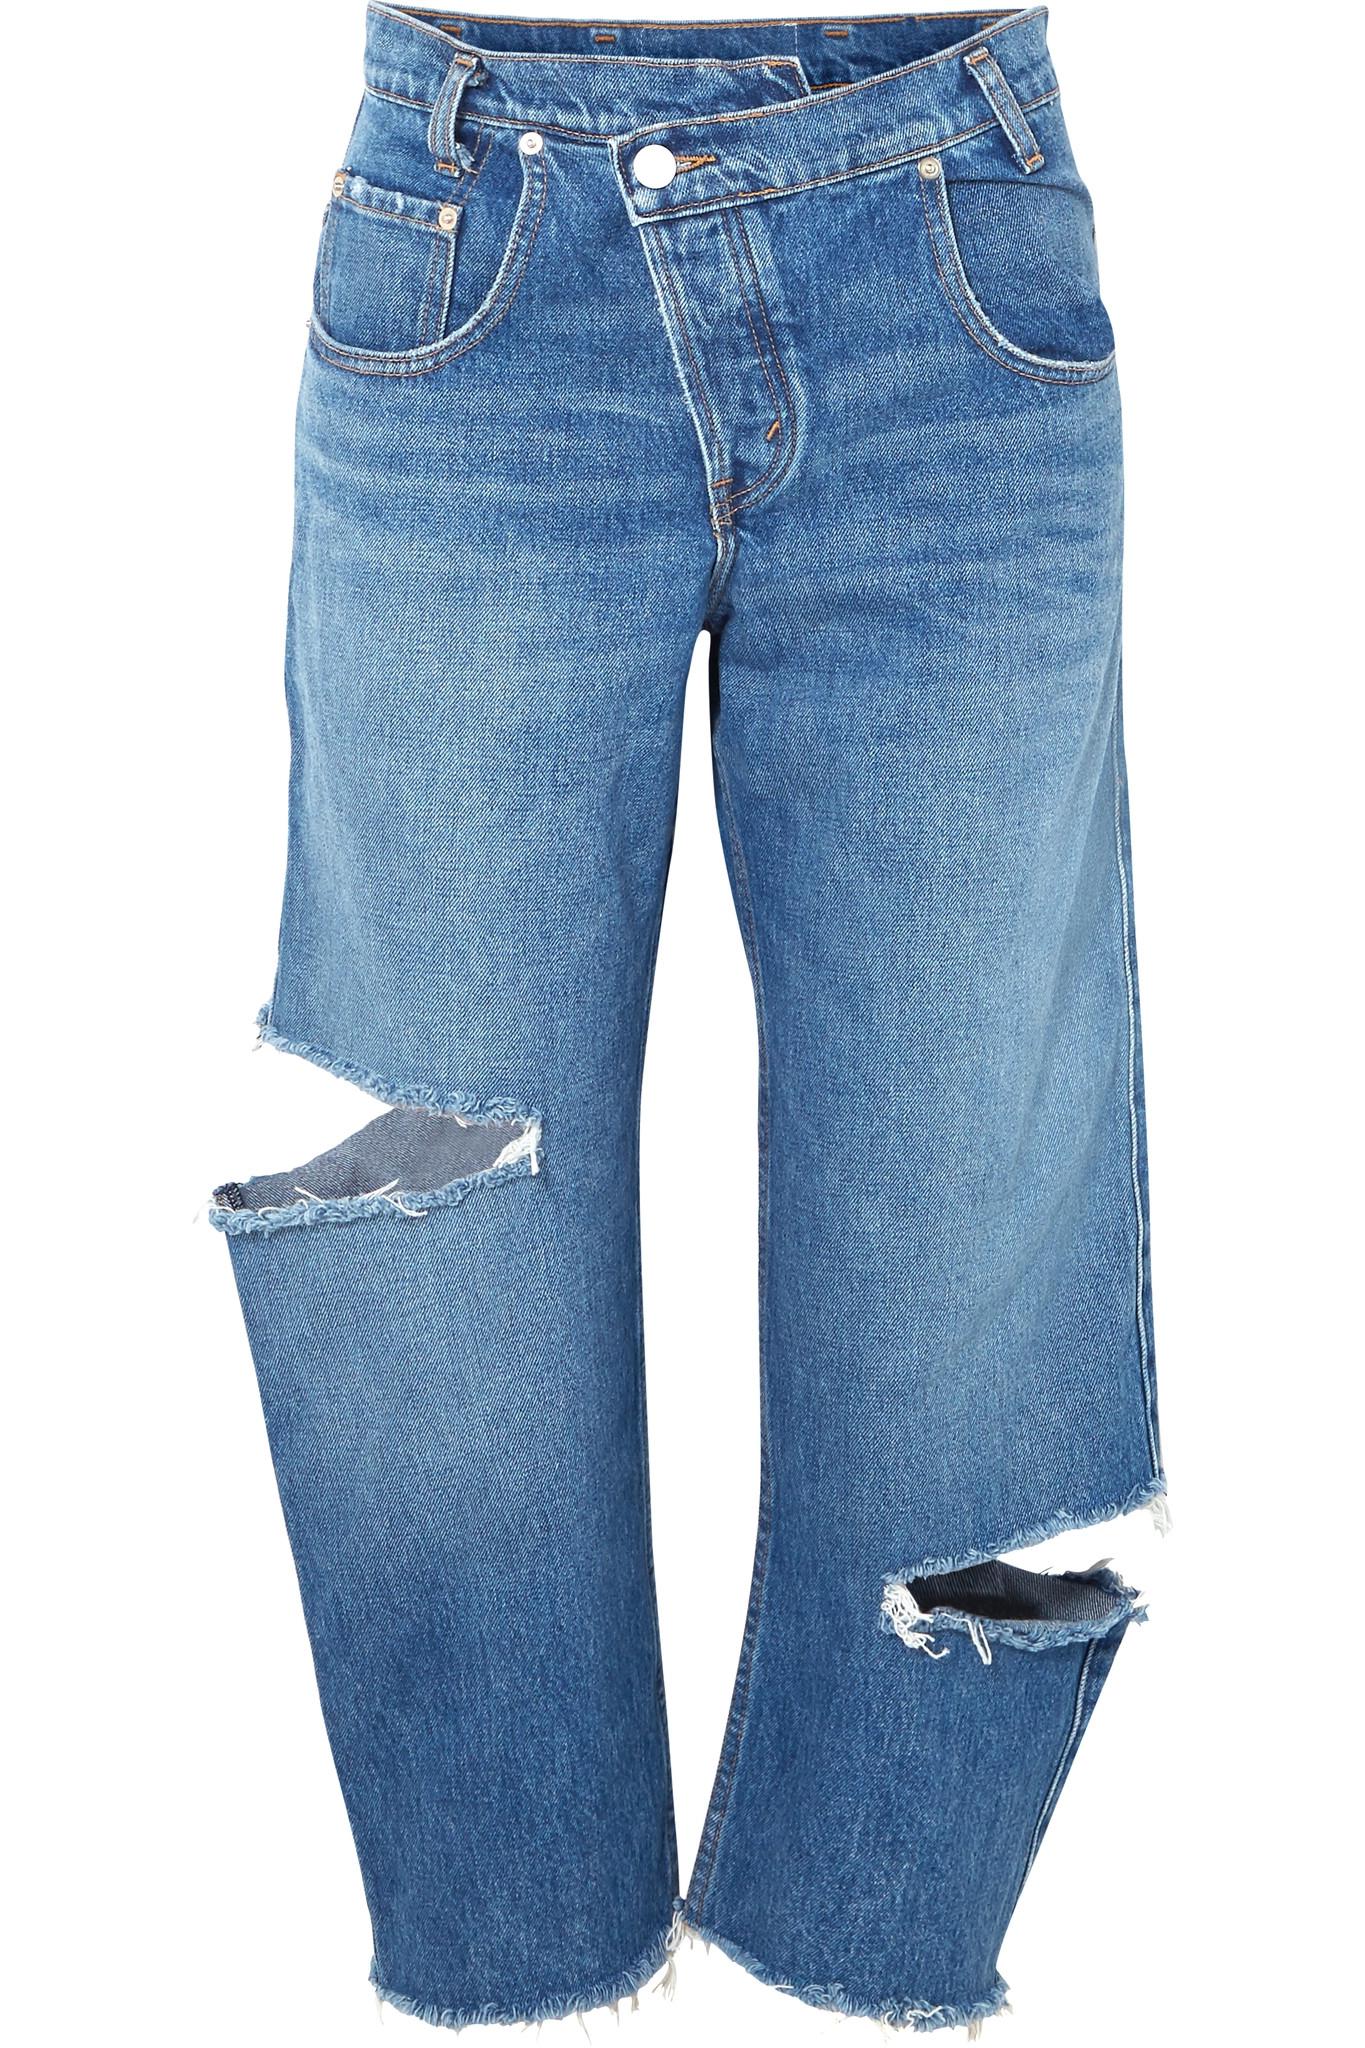 Monse Denim Distressed Boyfriend Jeans in Mid Denim (Blue) - Lyst